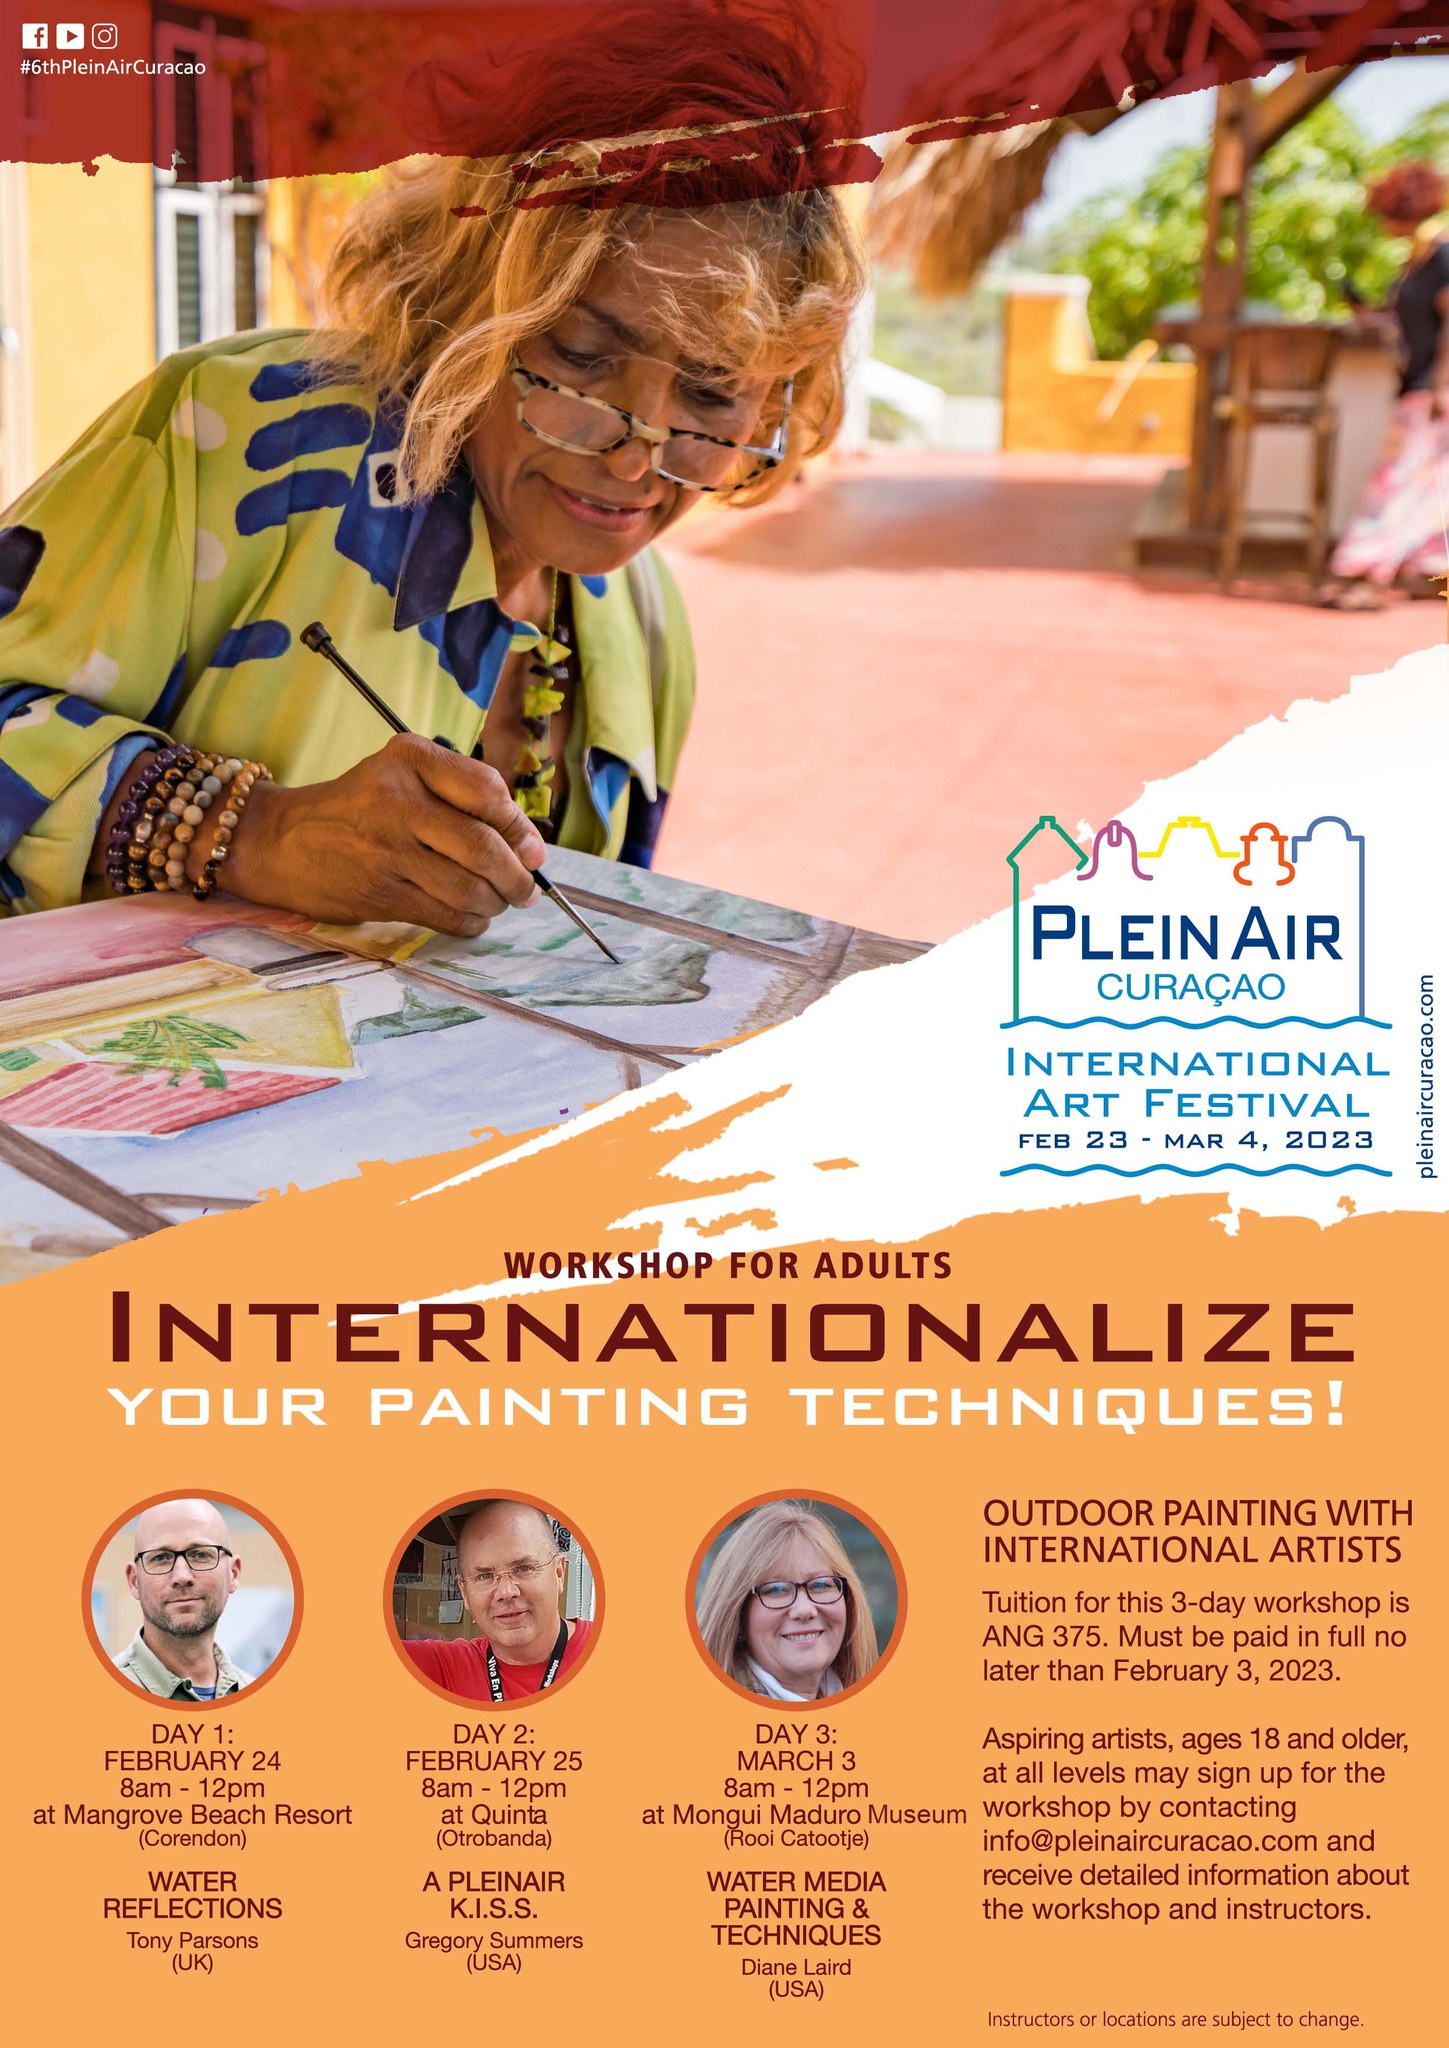 International Art Festival 2023 "Plein Air Curacao"